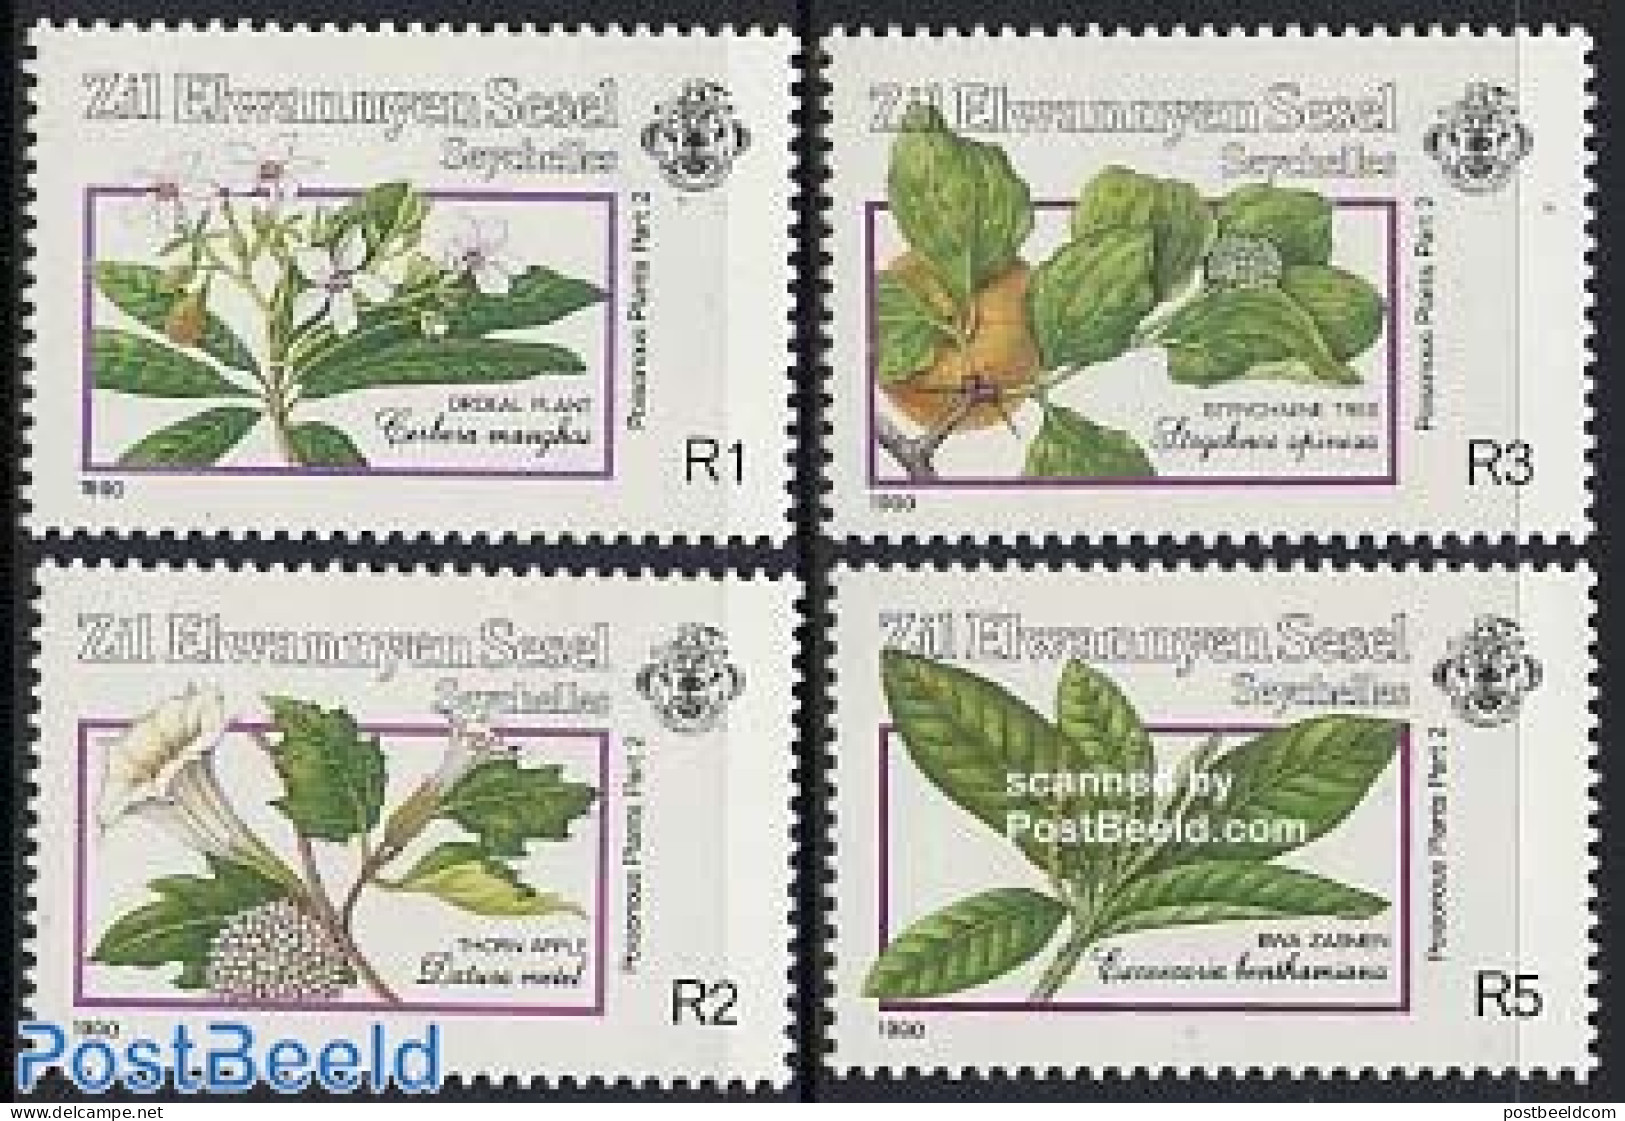 Seychelles, Zil Eloigne Sesel 1990 Poisened Plants 4v, Mint NH, Nature - Flowers & Plants - Seychellen (1976-...)